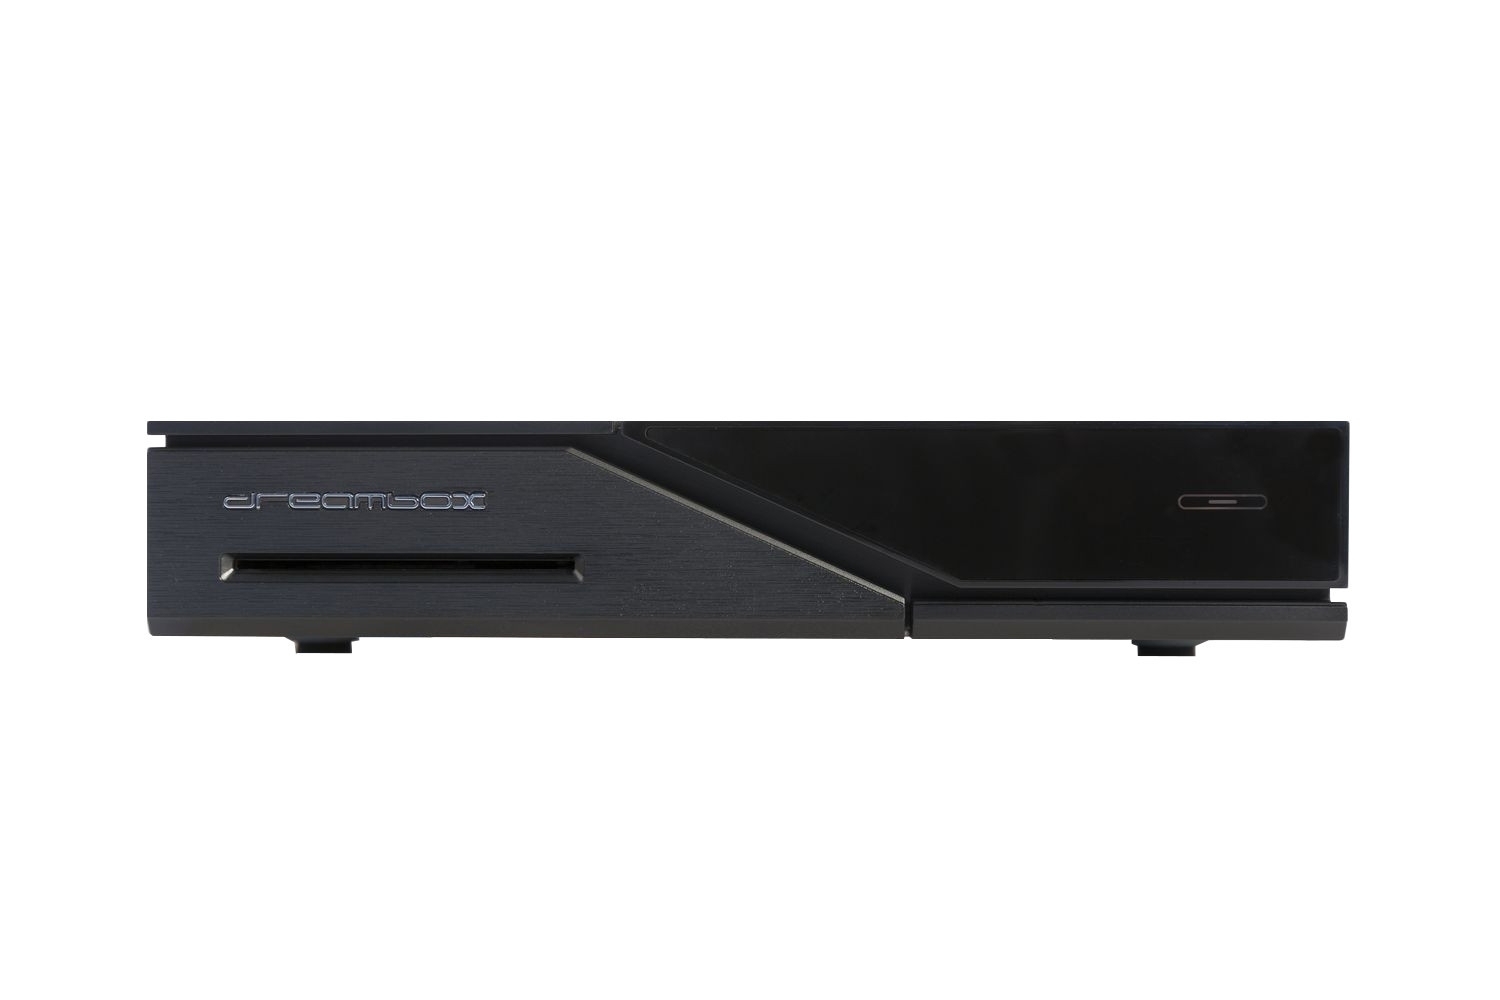 Dreambox DM525 HD 1x DVB-C/T2 Tuner PVR ready Full HD 1080p H.265 Linux Receiver